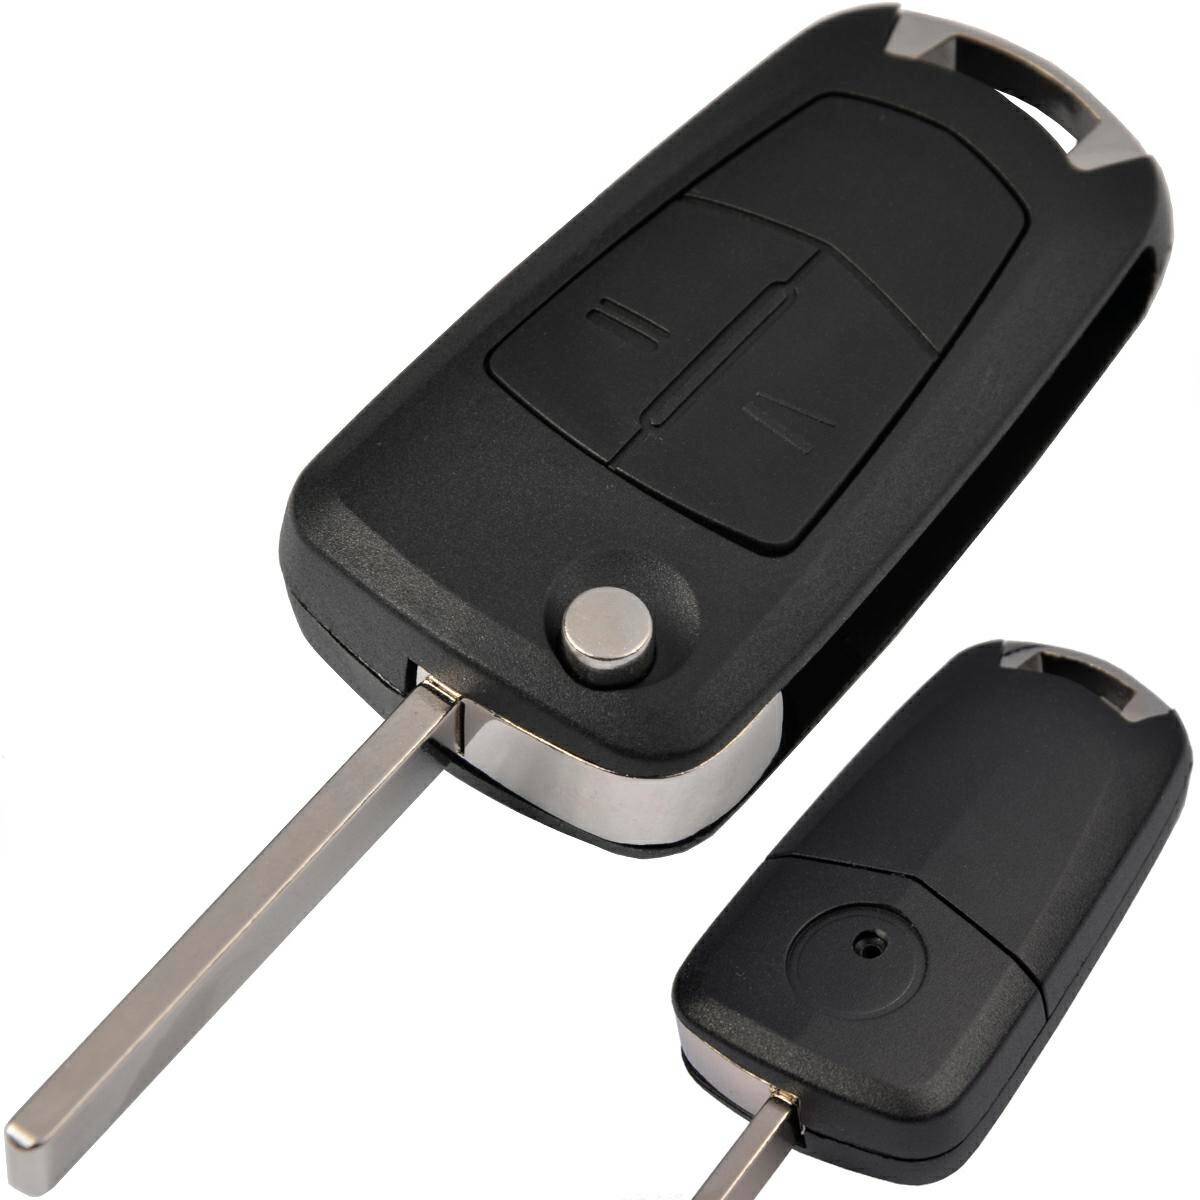 Keyline ISU5TK - Isuzu  Motokey online store - Keys, Remotes, Accessories,  Locks